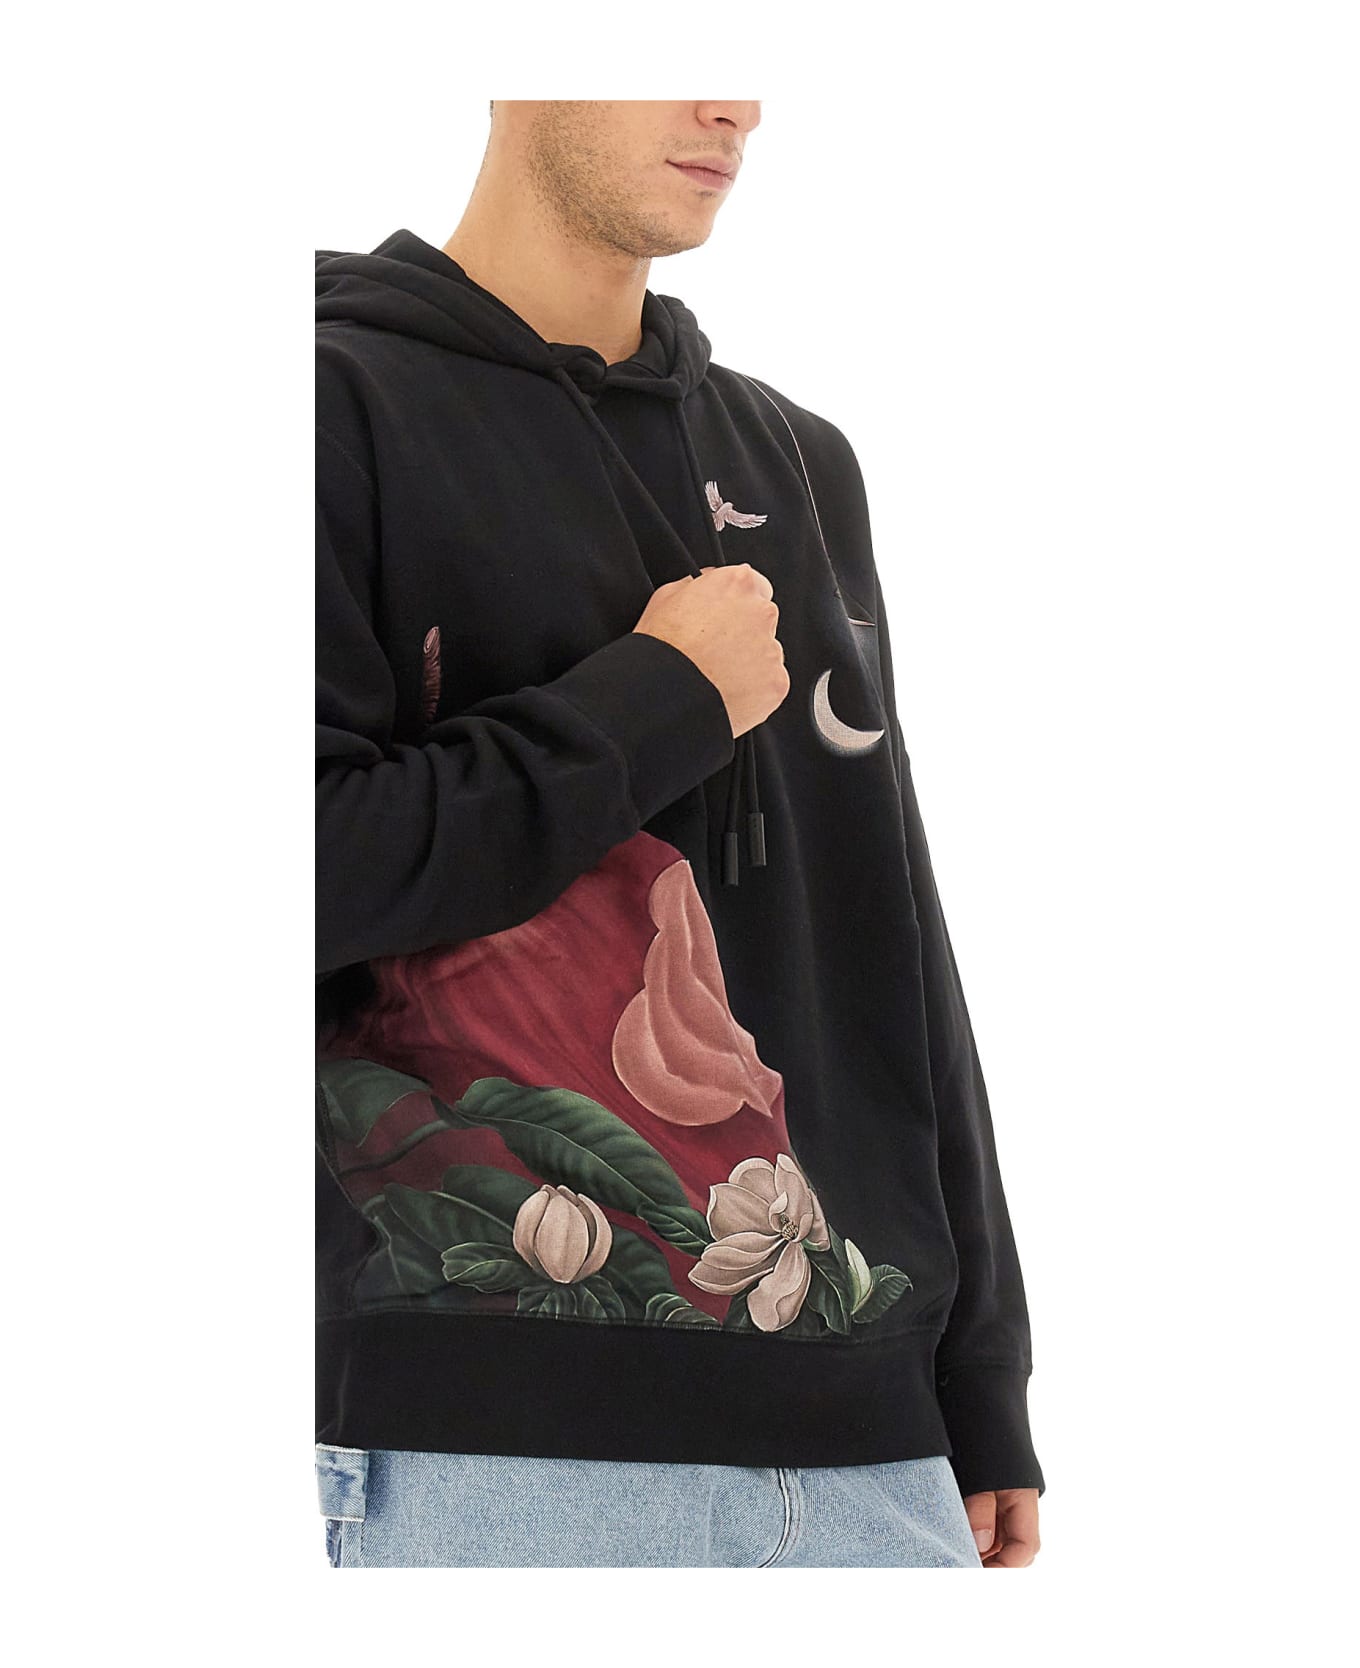 3.Paradis Apple Sweatshirt - NERO